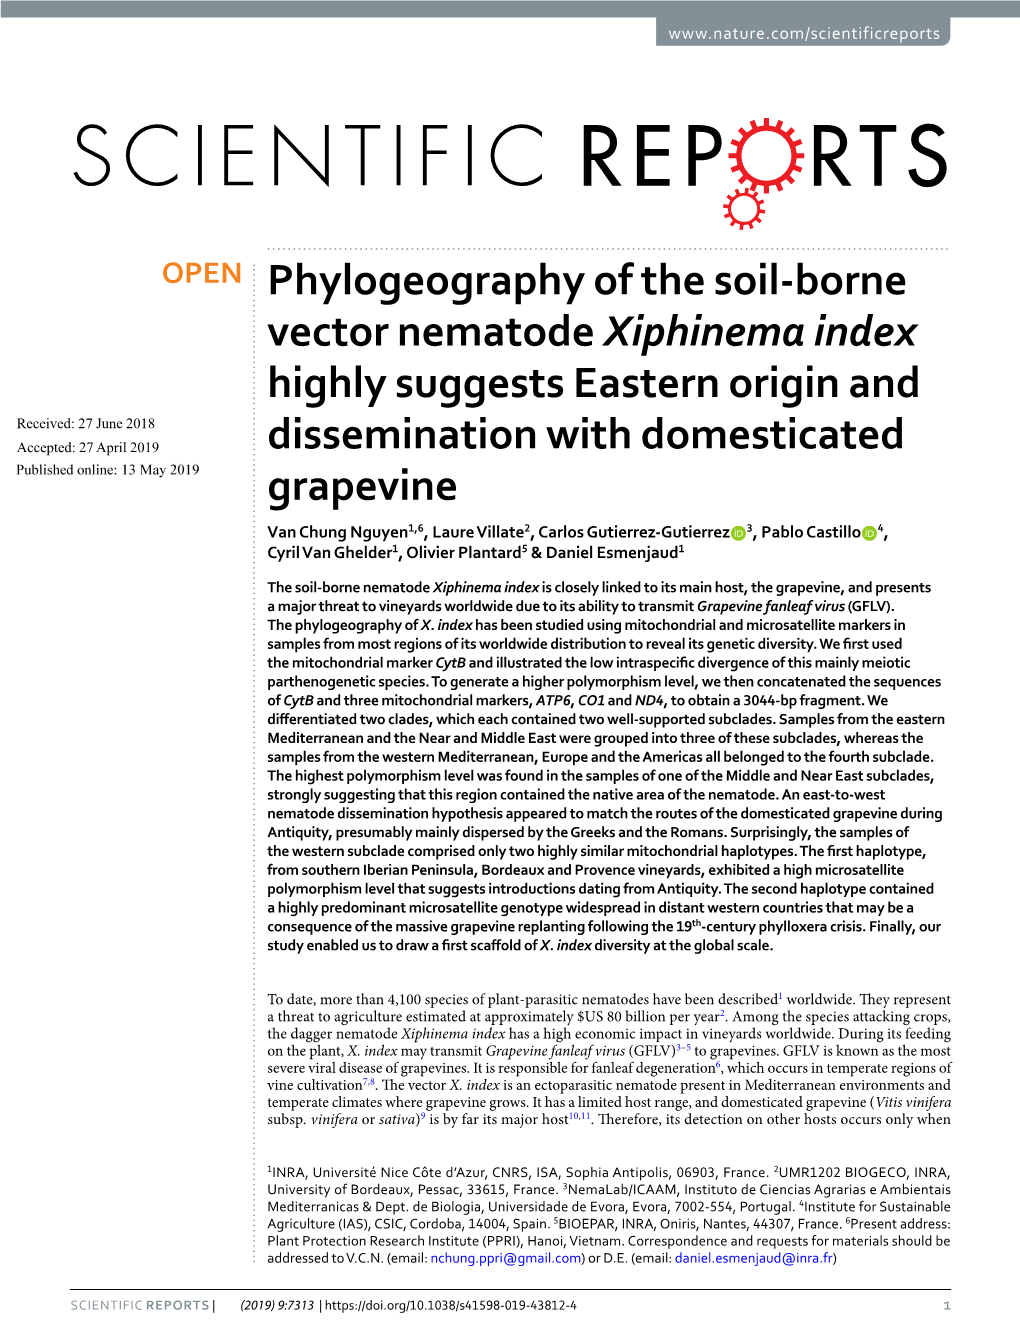 Phylogeography of the Soil-Borne Vector Nematode Xiphinema Index